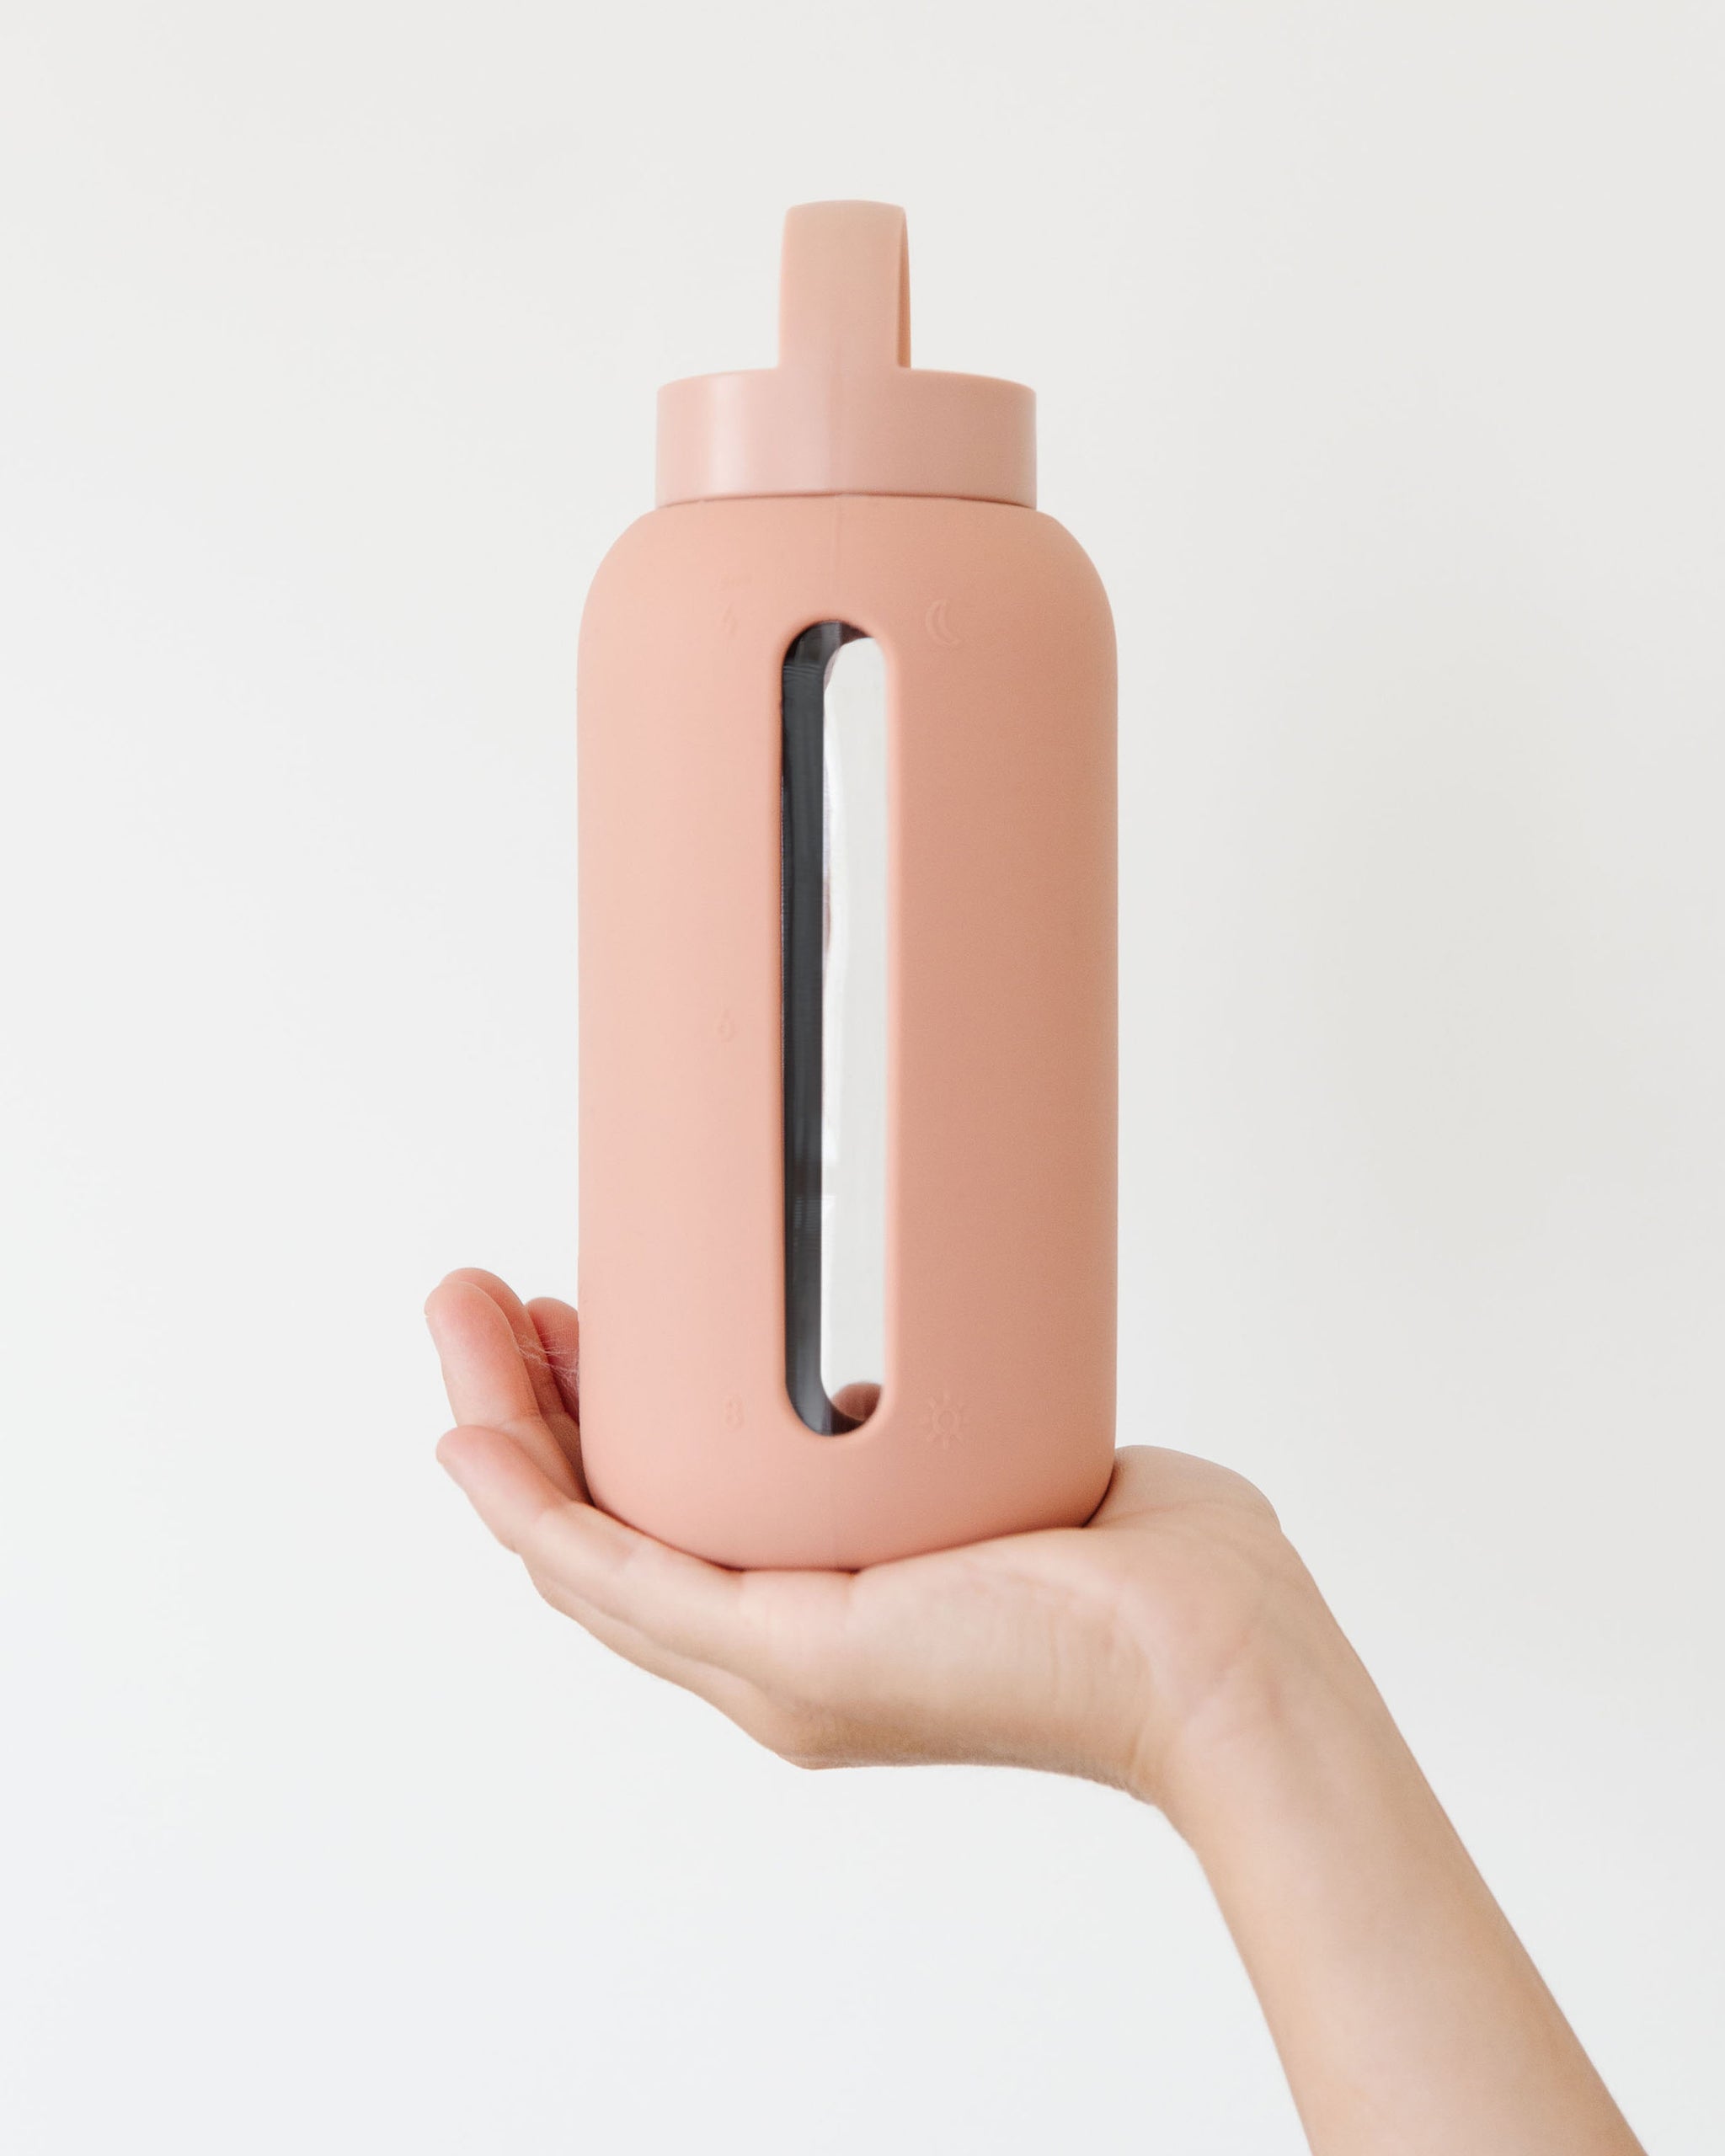 Bink Day Bottle | The Hydration Tracking Water Bottle - Cream